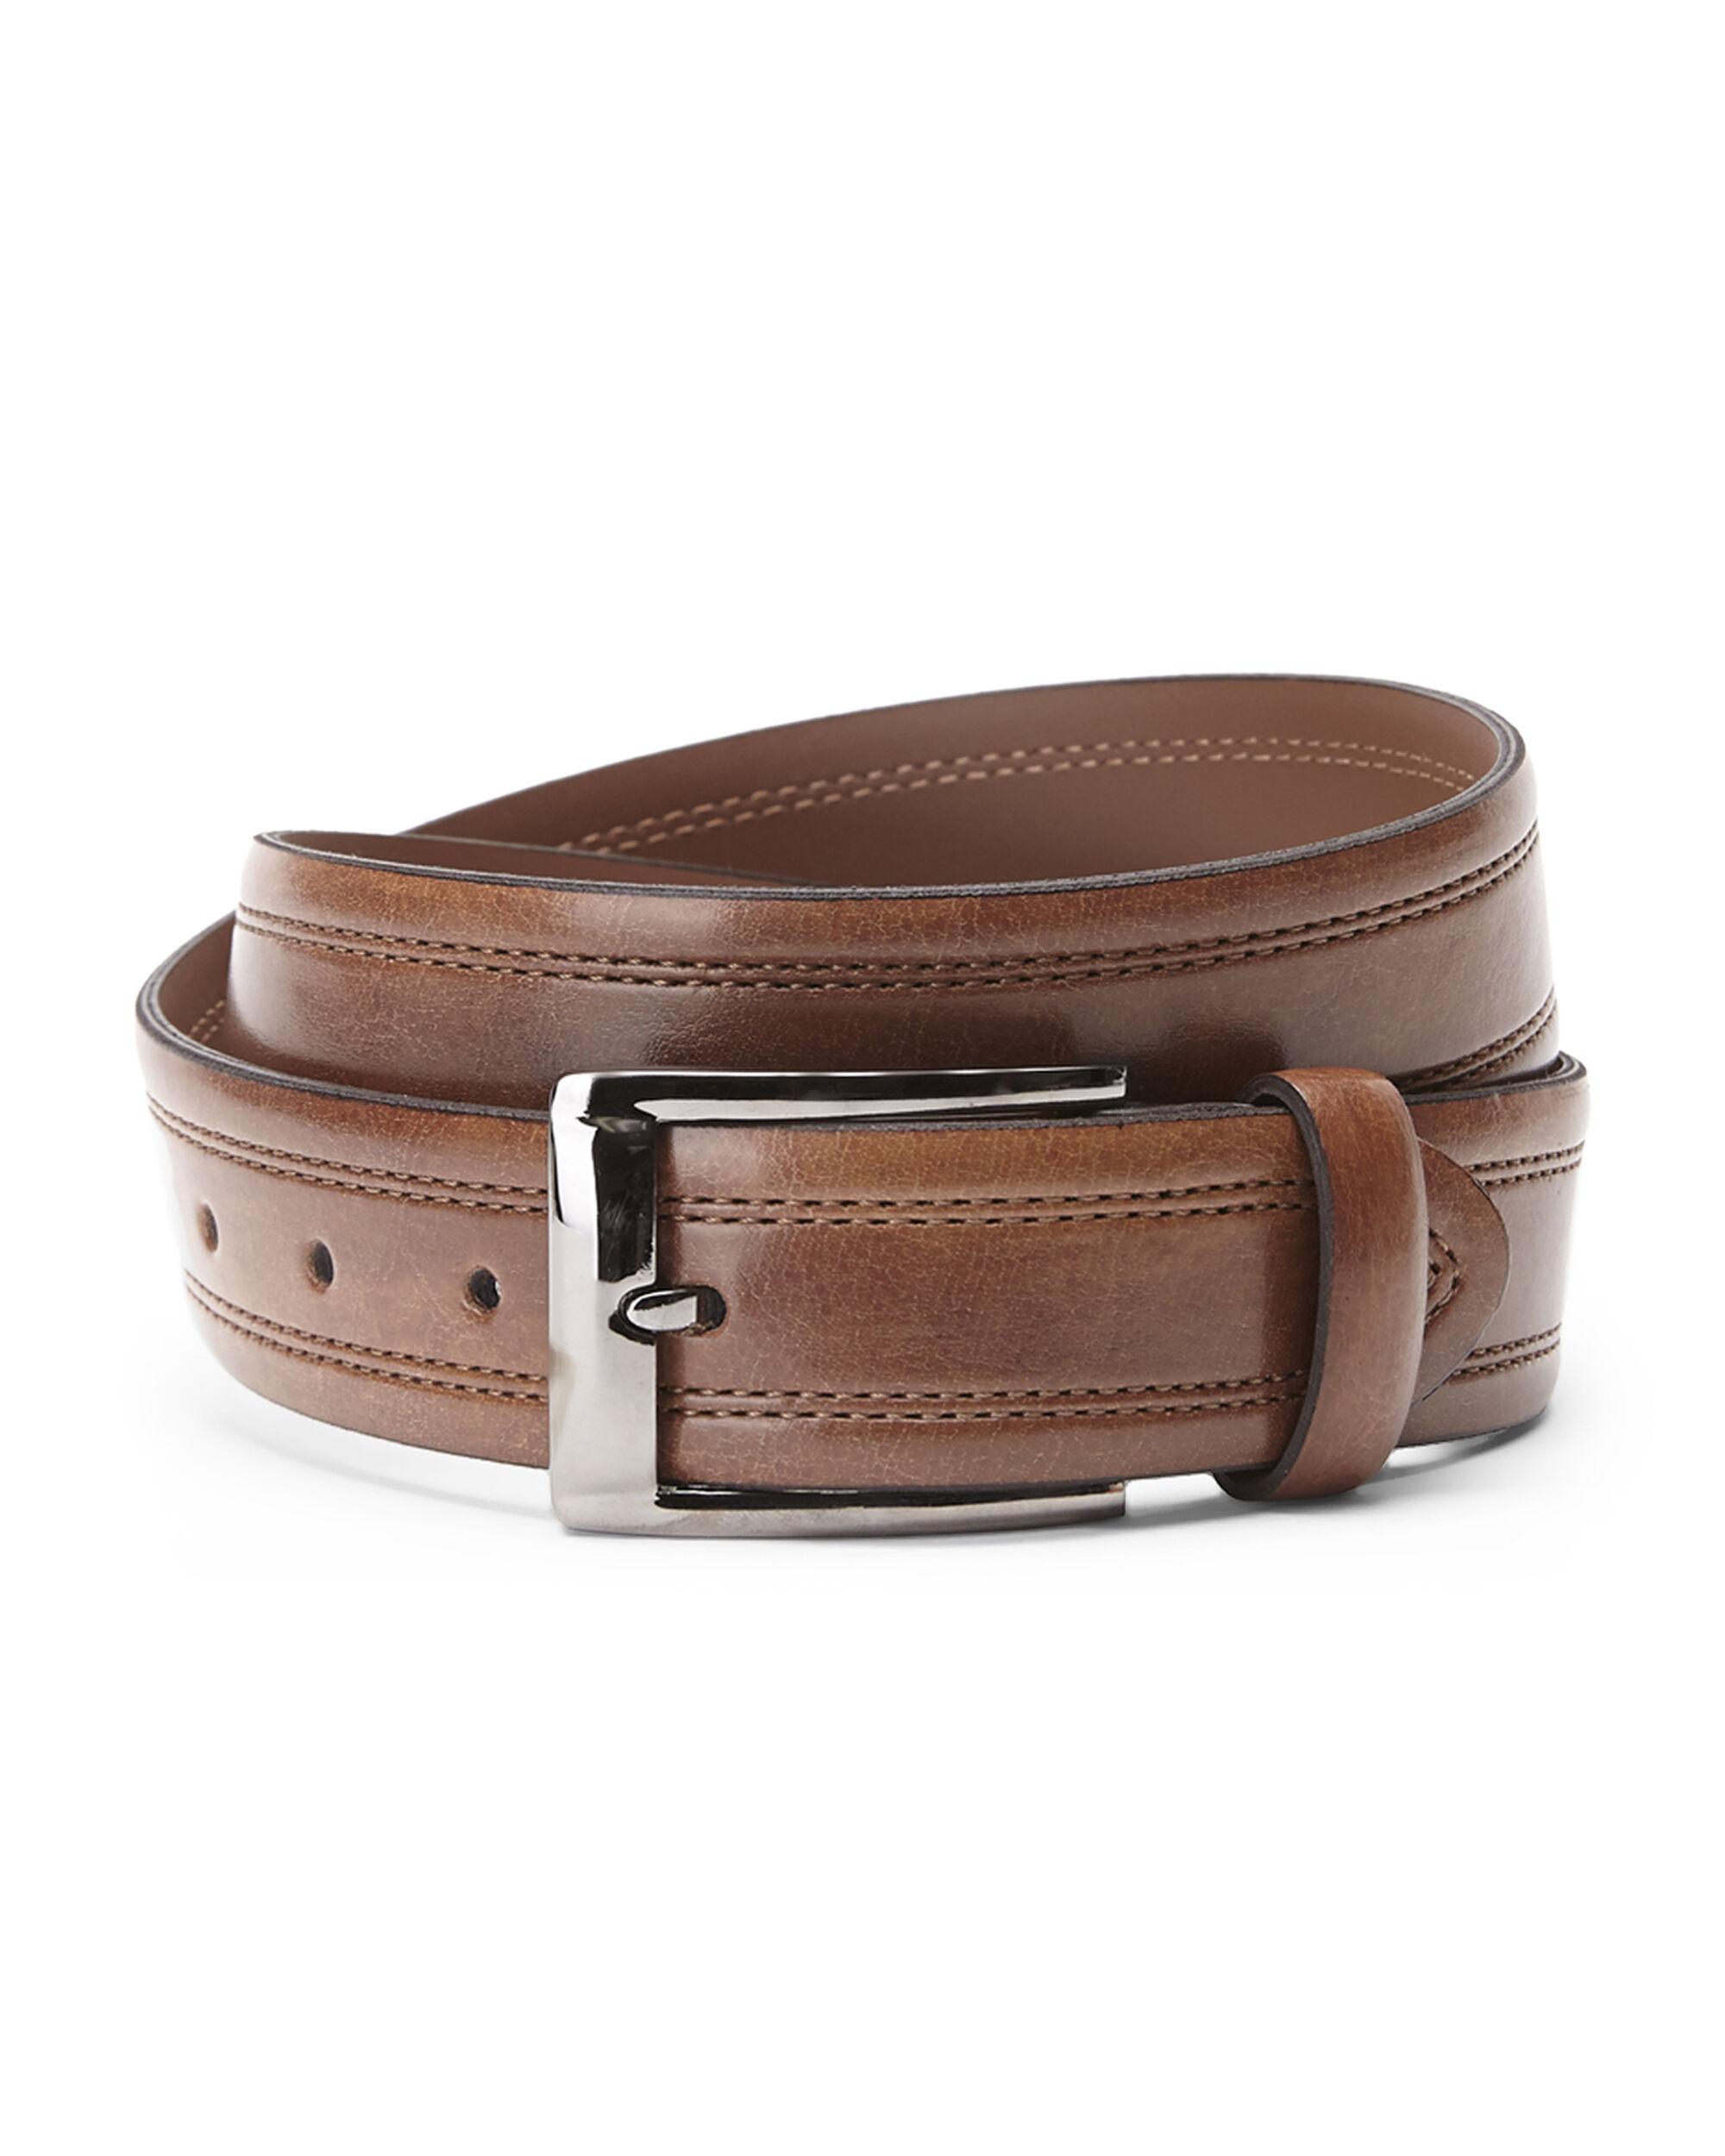 Bosca Leather Belt in Dark Tan (Brown) for Men - Lyst